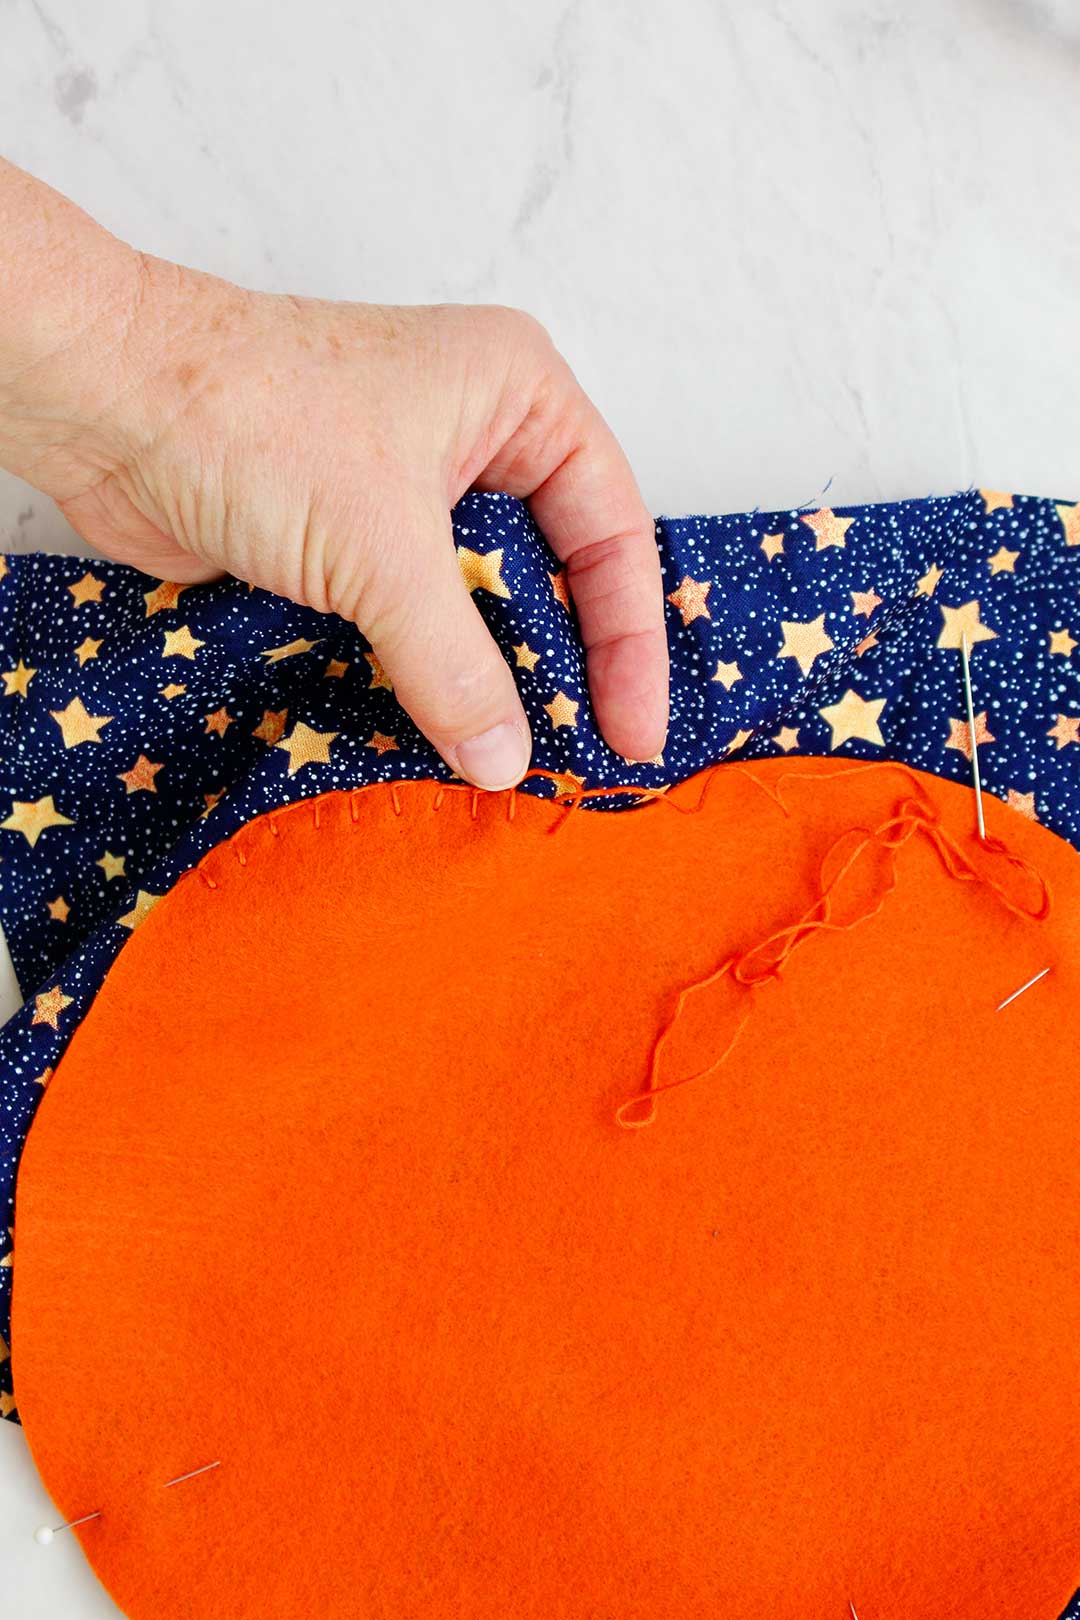 Hand sewing orange thread around the outline of the felt pumpkin decoration.